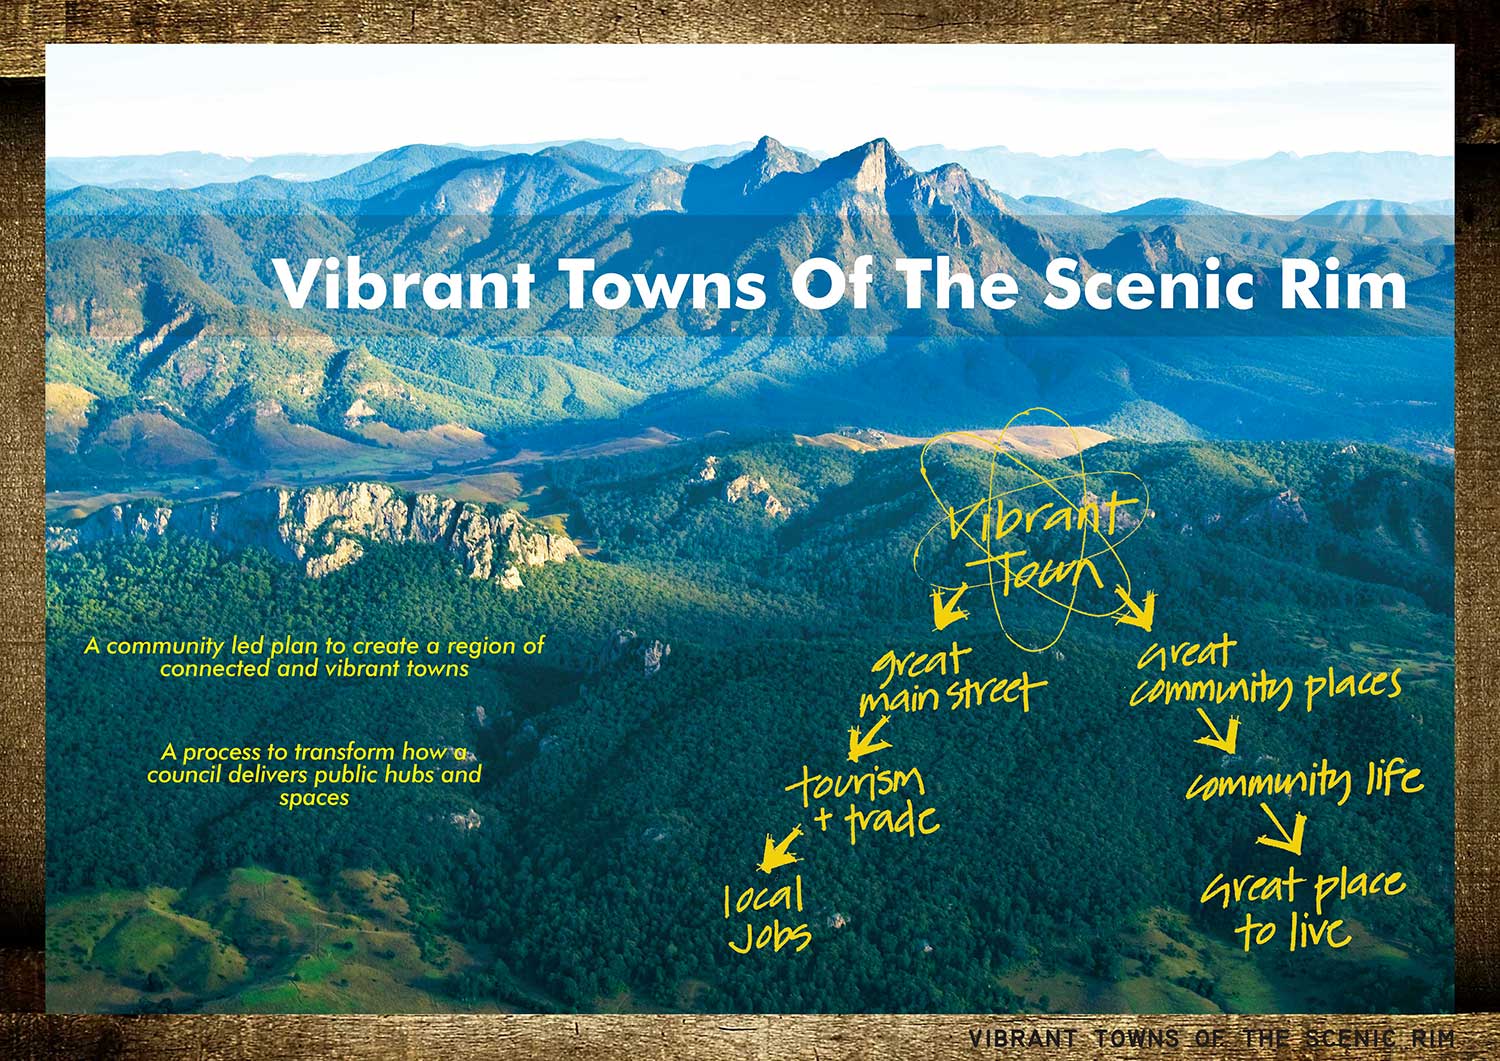 Vibrant Towns of the Scenic Rim